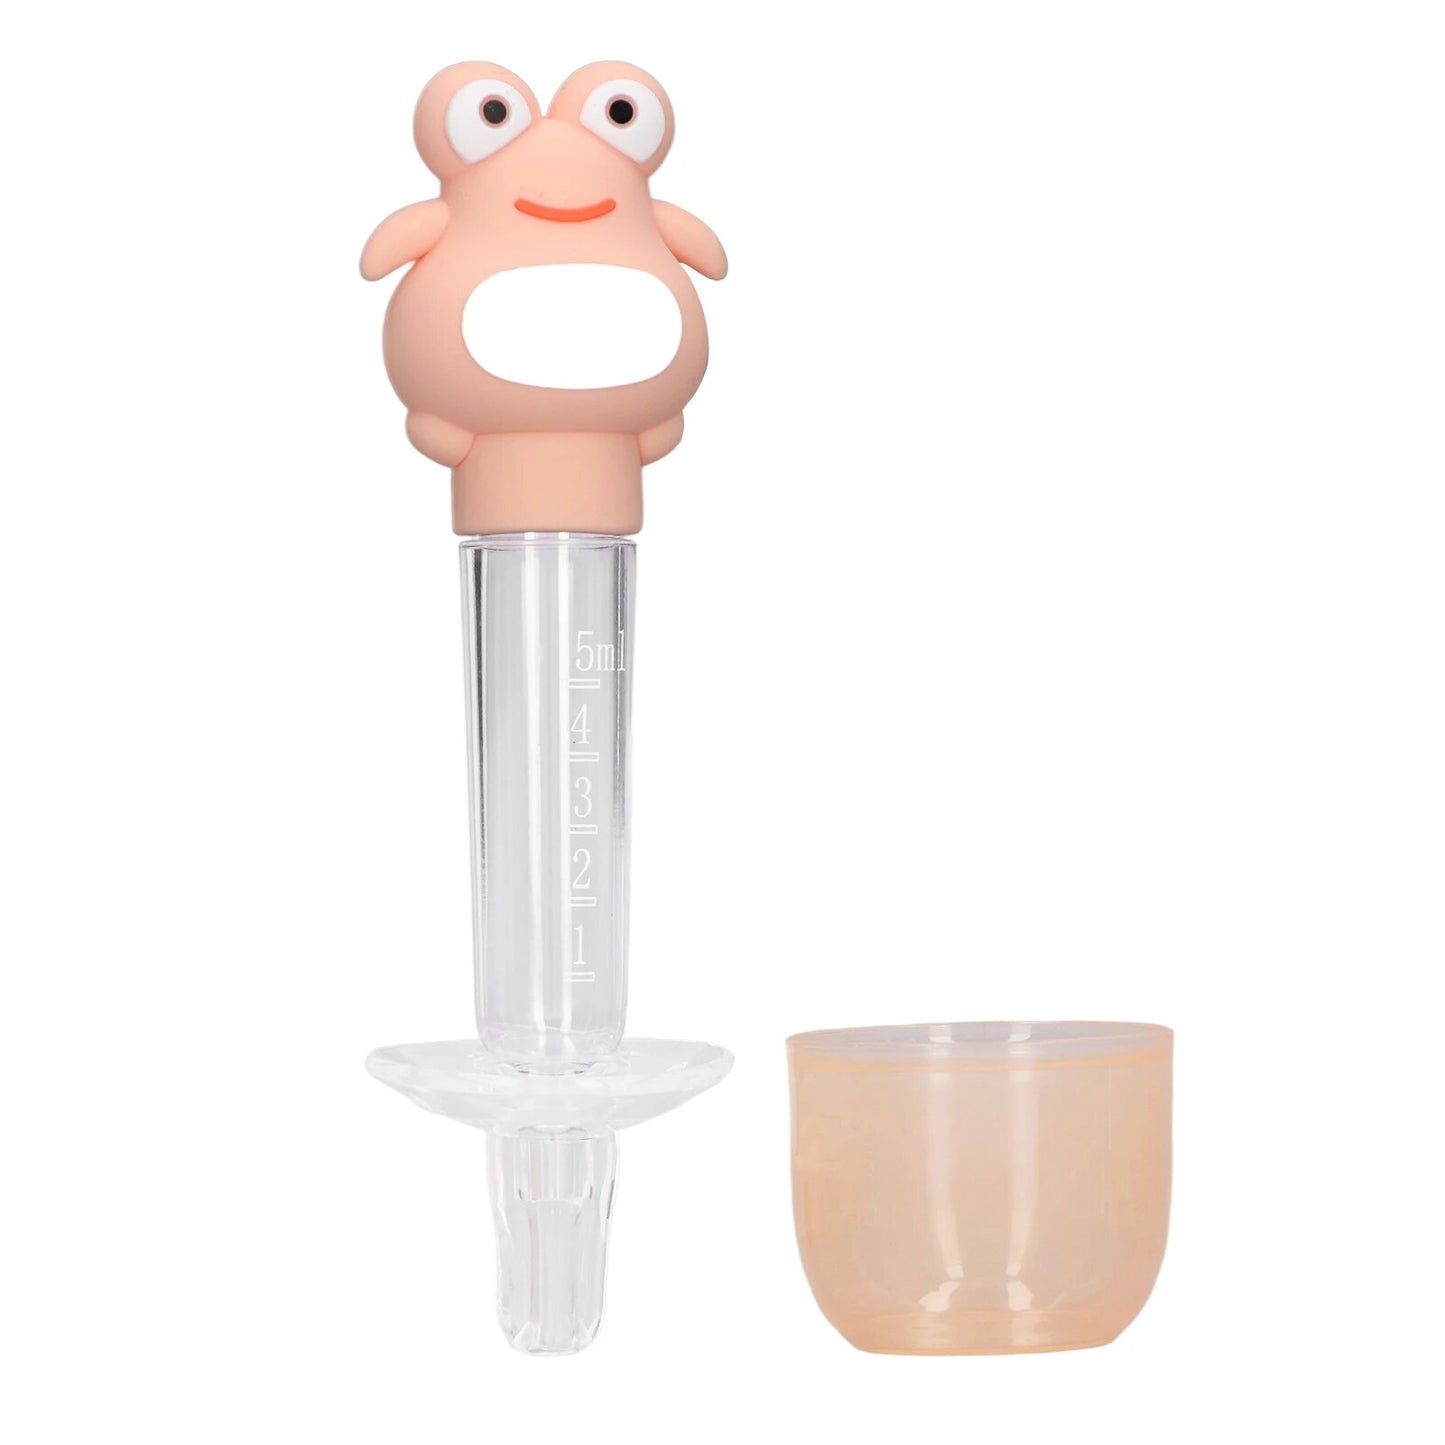 Premium Baby Medicine Dispenser - Gentle Oral Syringe Pacifier, Cute & Safe for Newborns to Toddlers